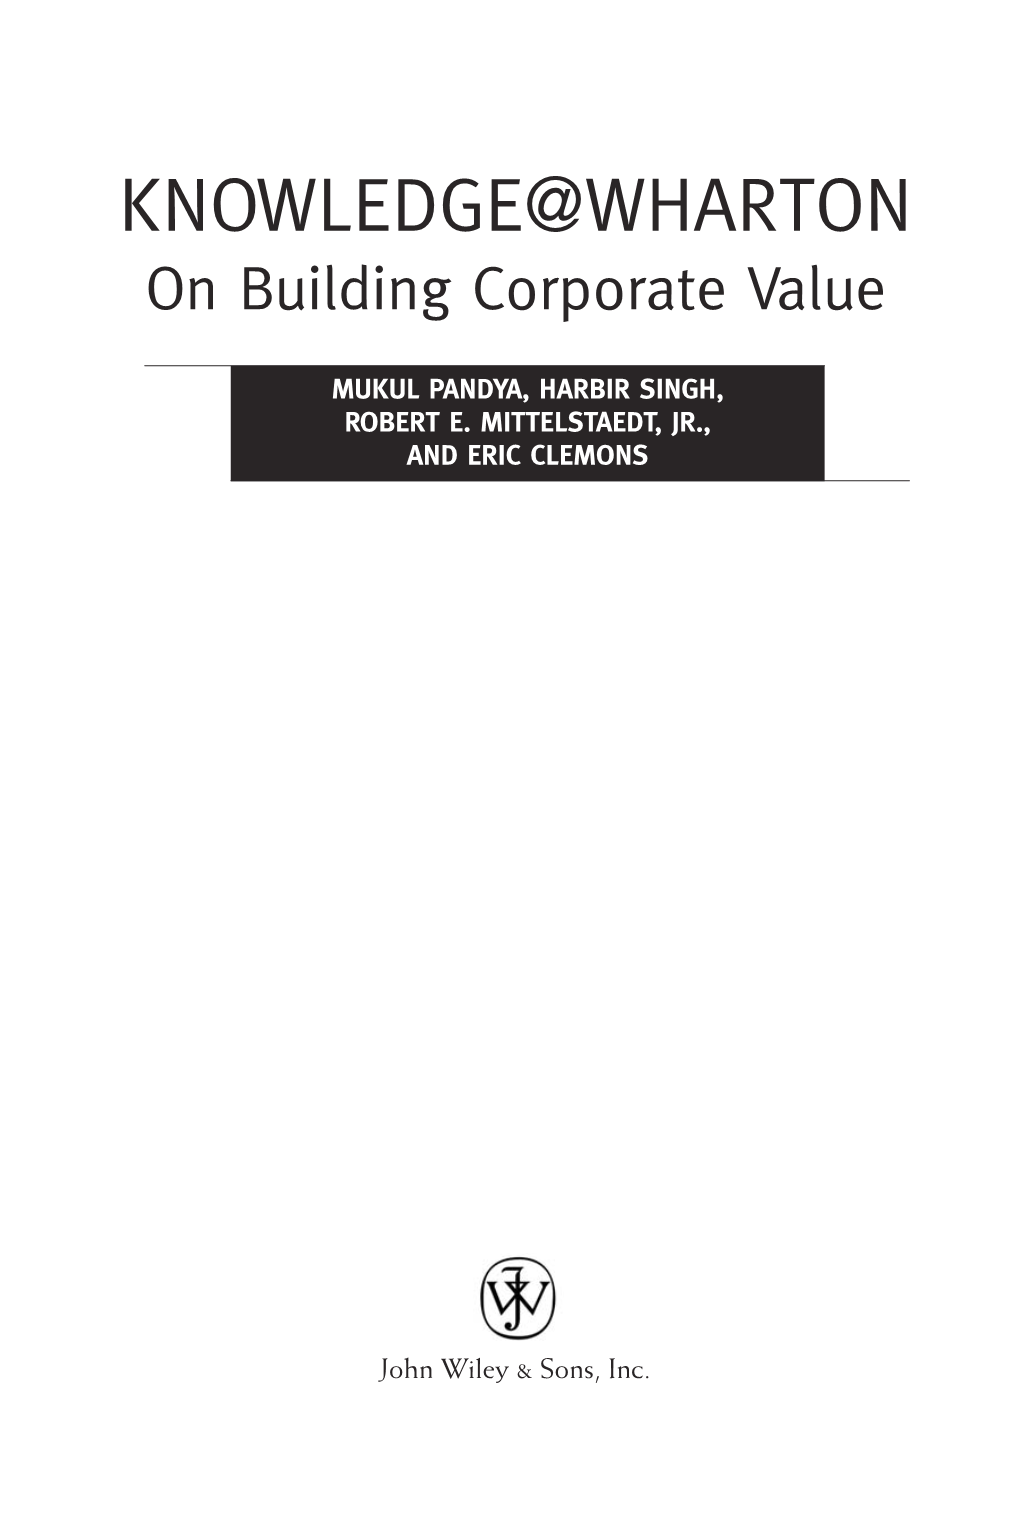 KNOWLEDGE@WHARTON on Building Corporate Value